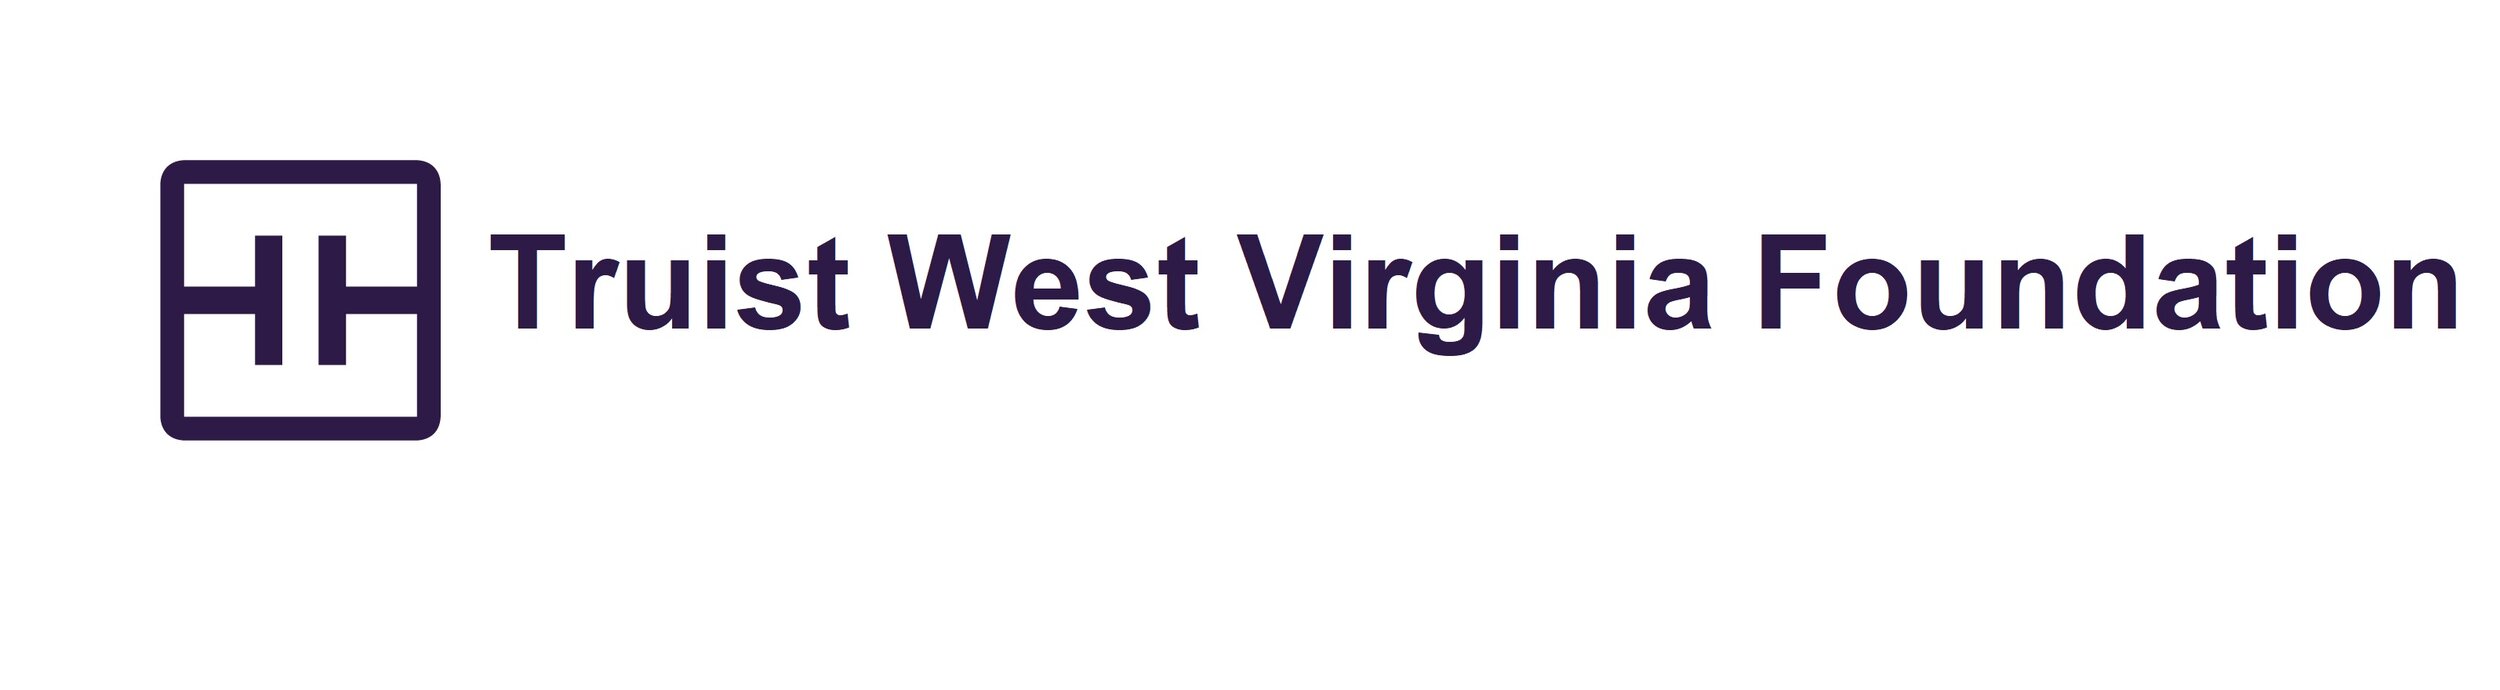 Truist West Virginia Foundation jpg.jpg